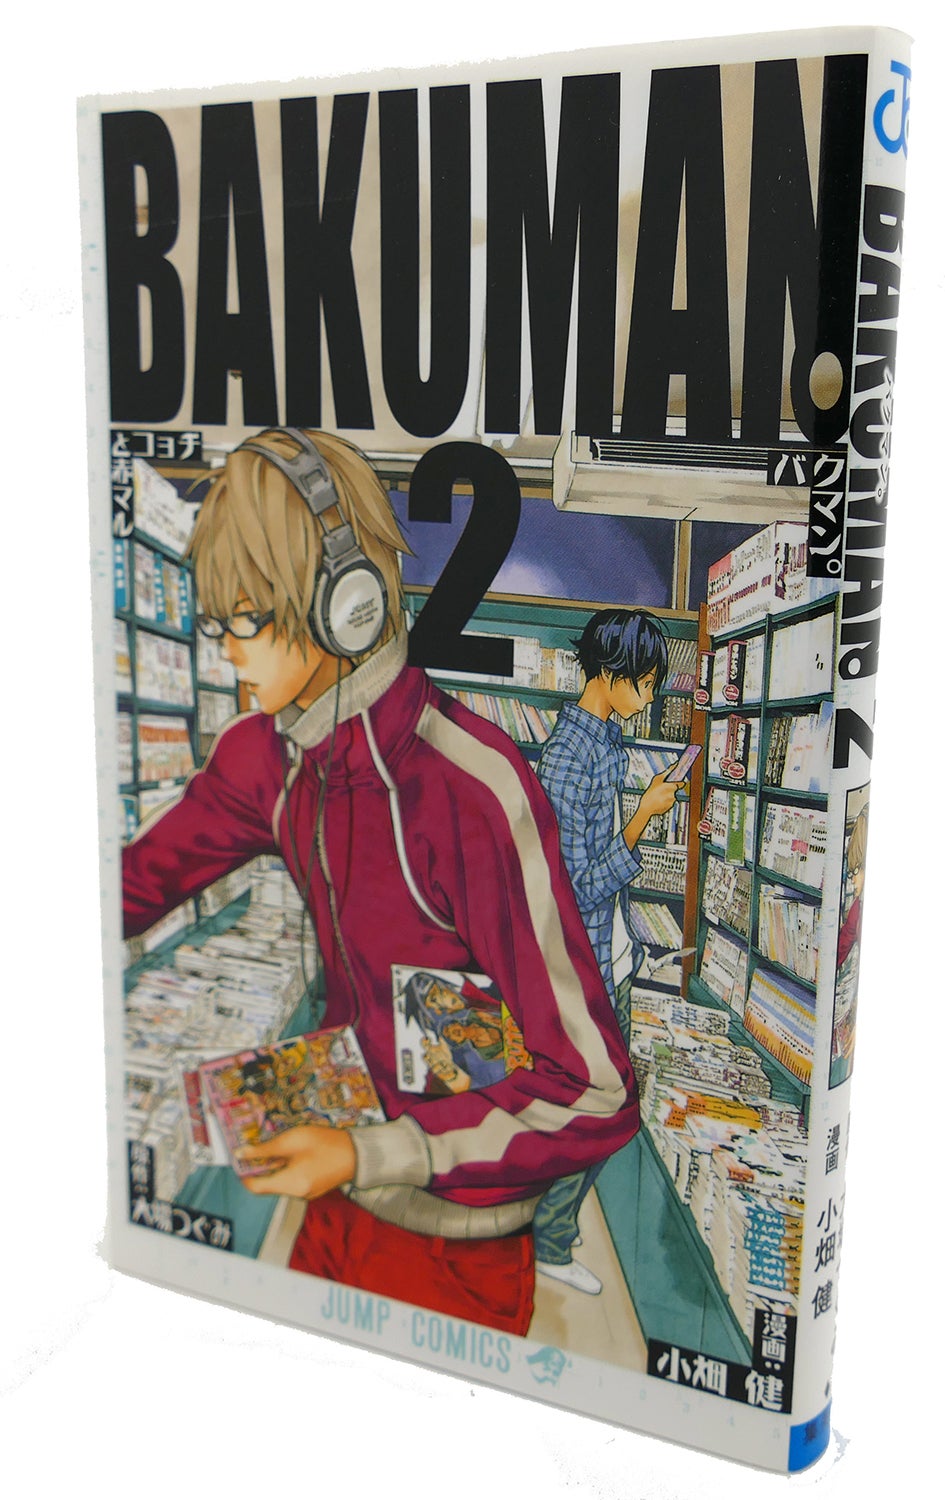 What Makes Bakuman Special Among Shonen Manga